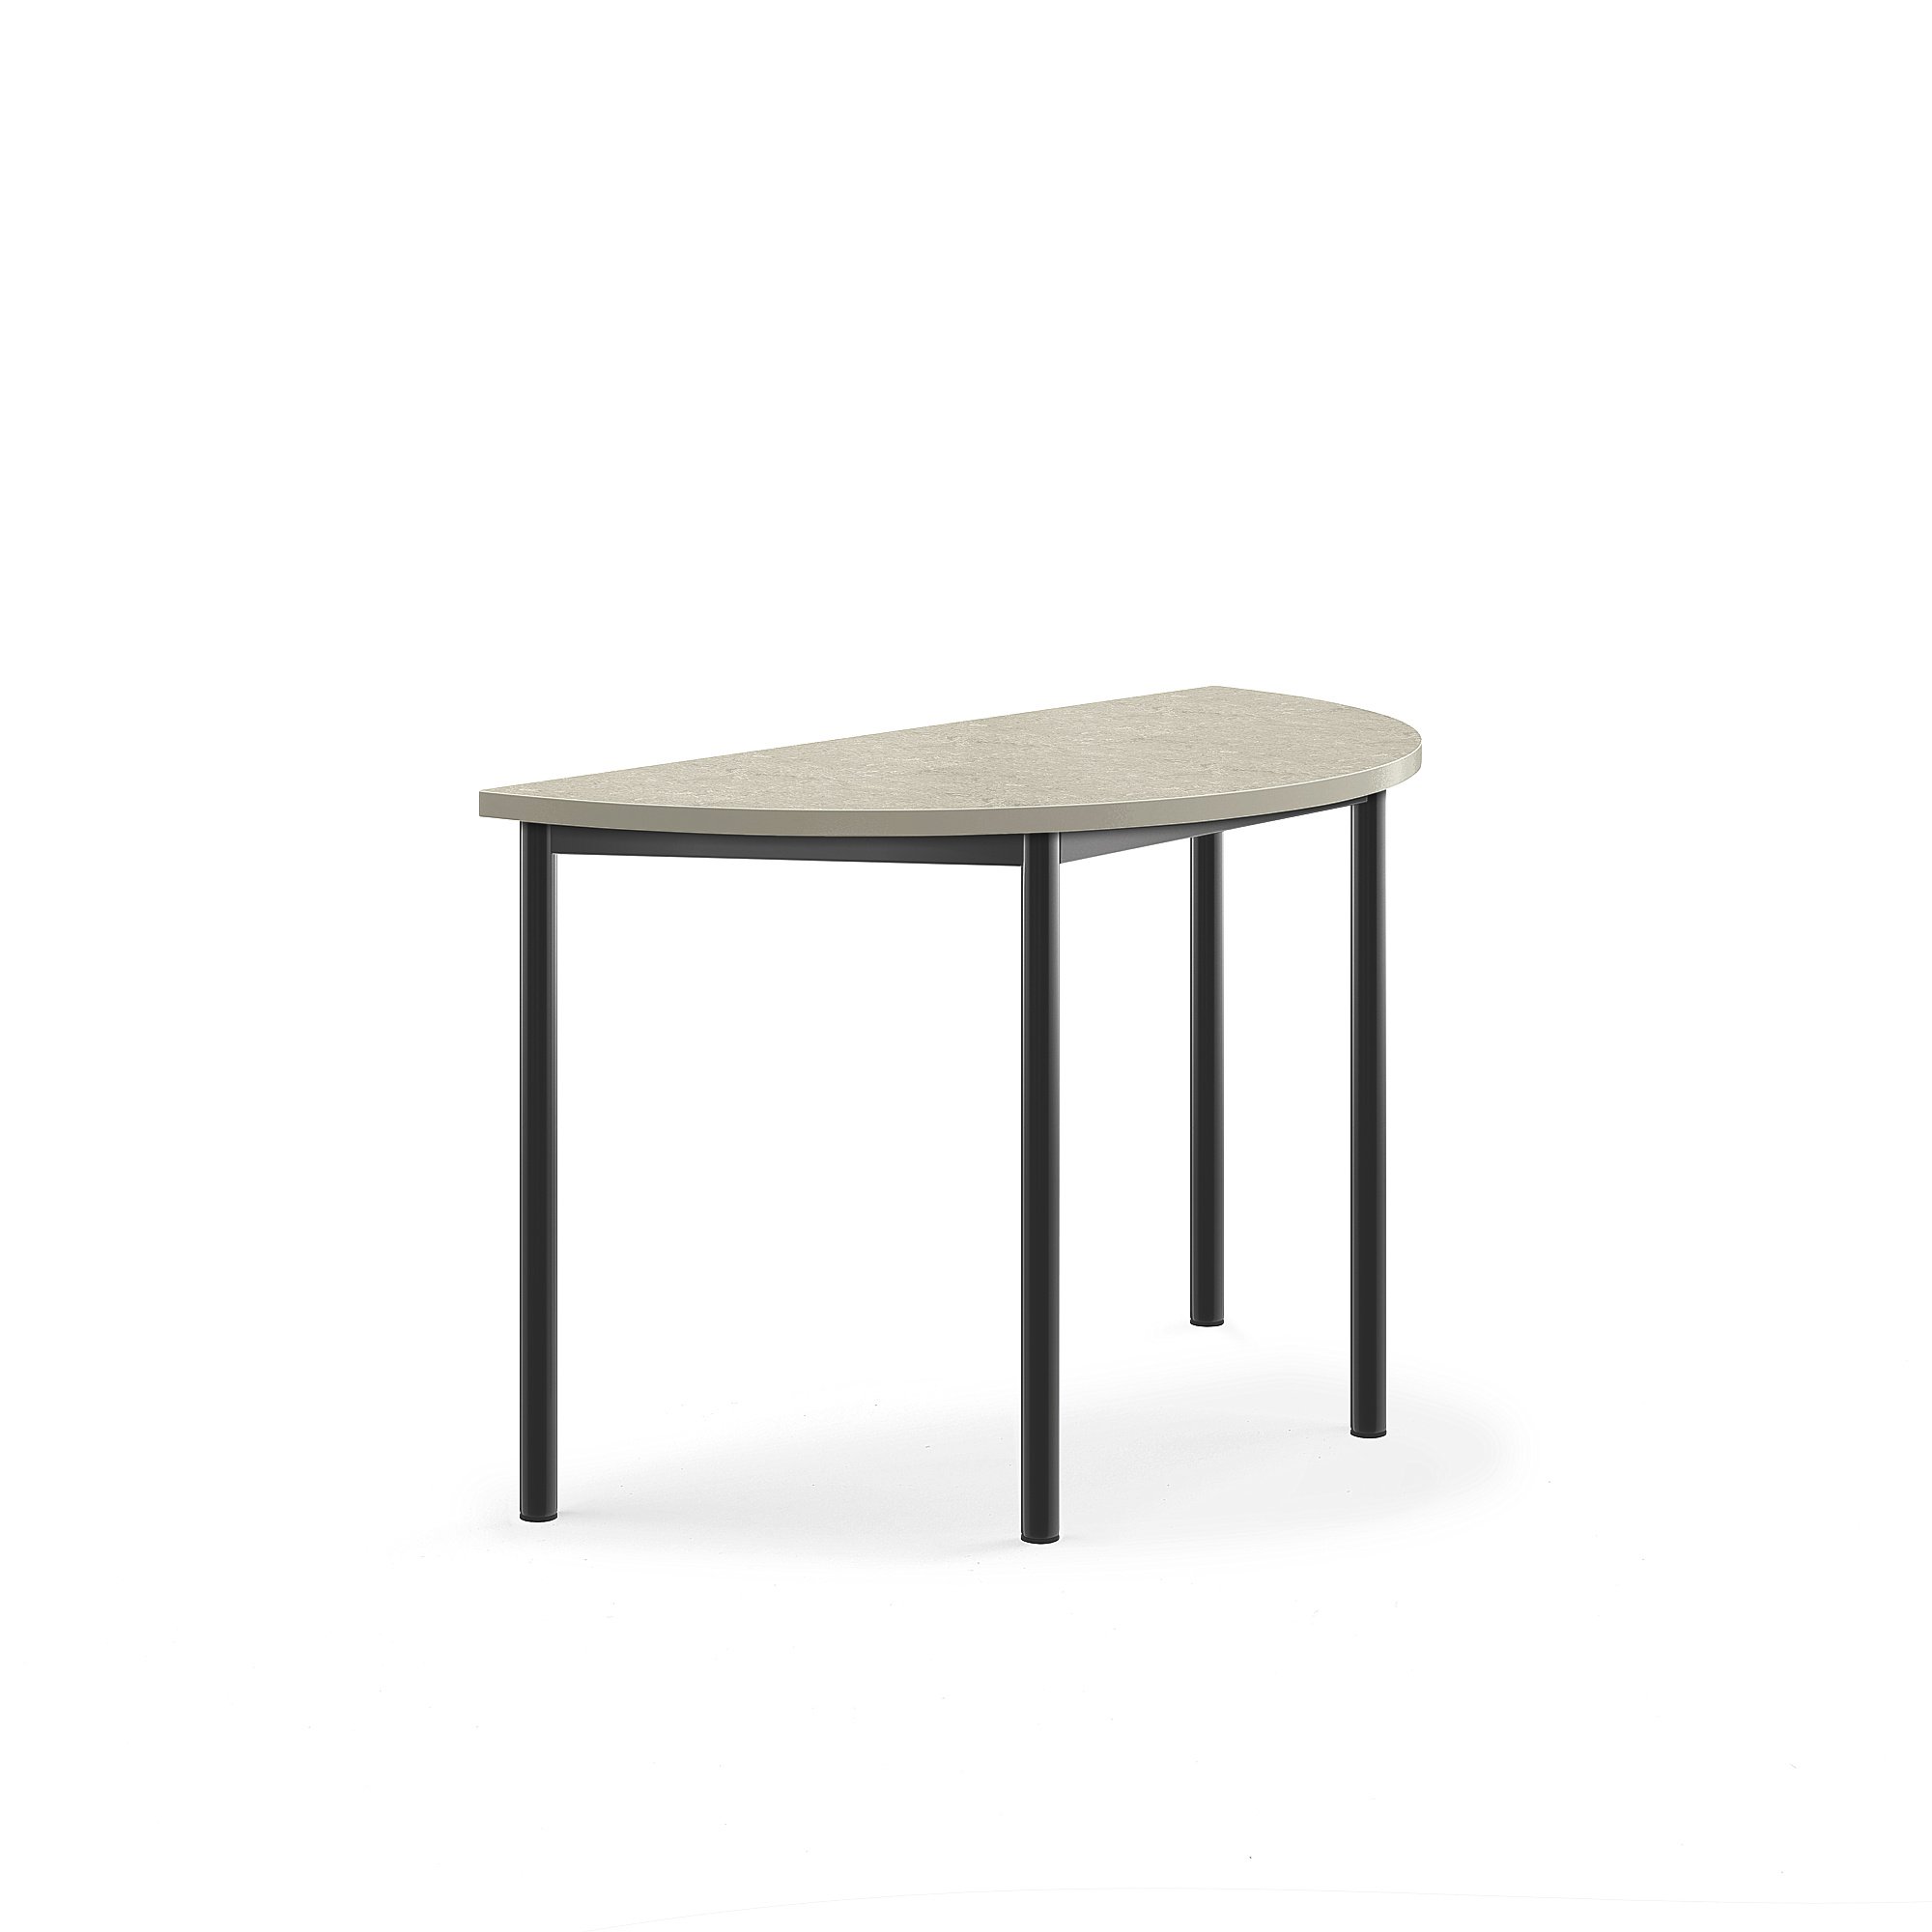 Stůl SONITUS, půlkruh, 1200x600x720 mm, antracitově šedé nohy, deska s linoleem, šedá